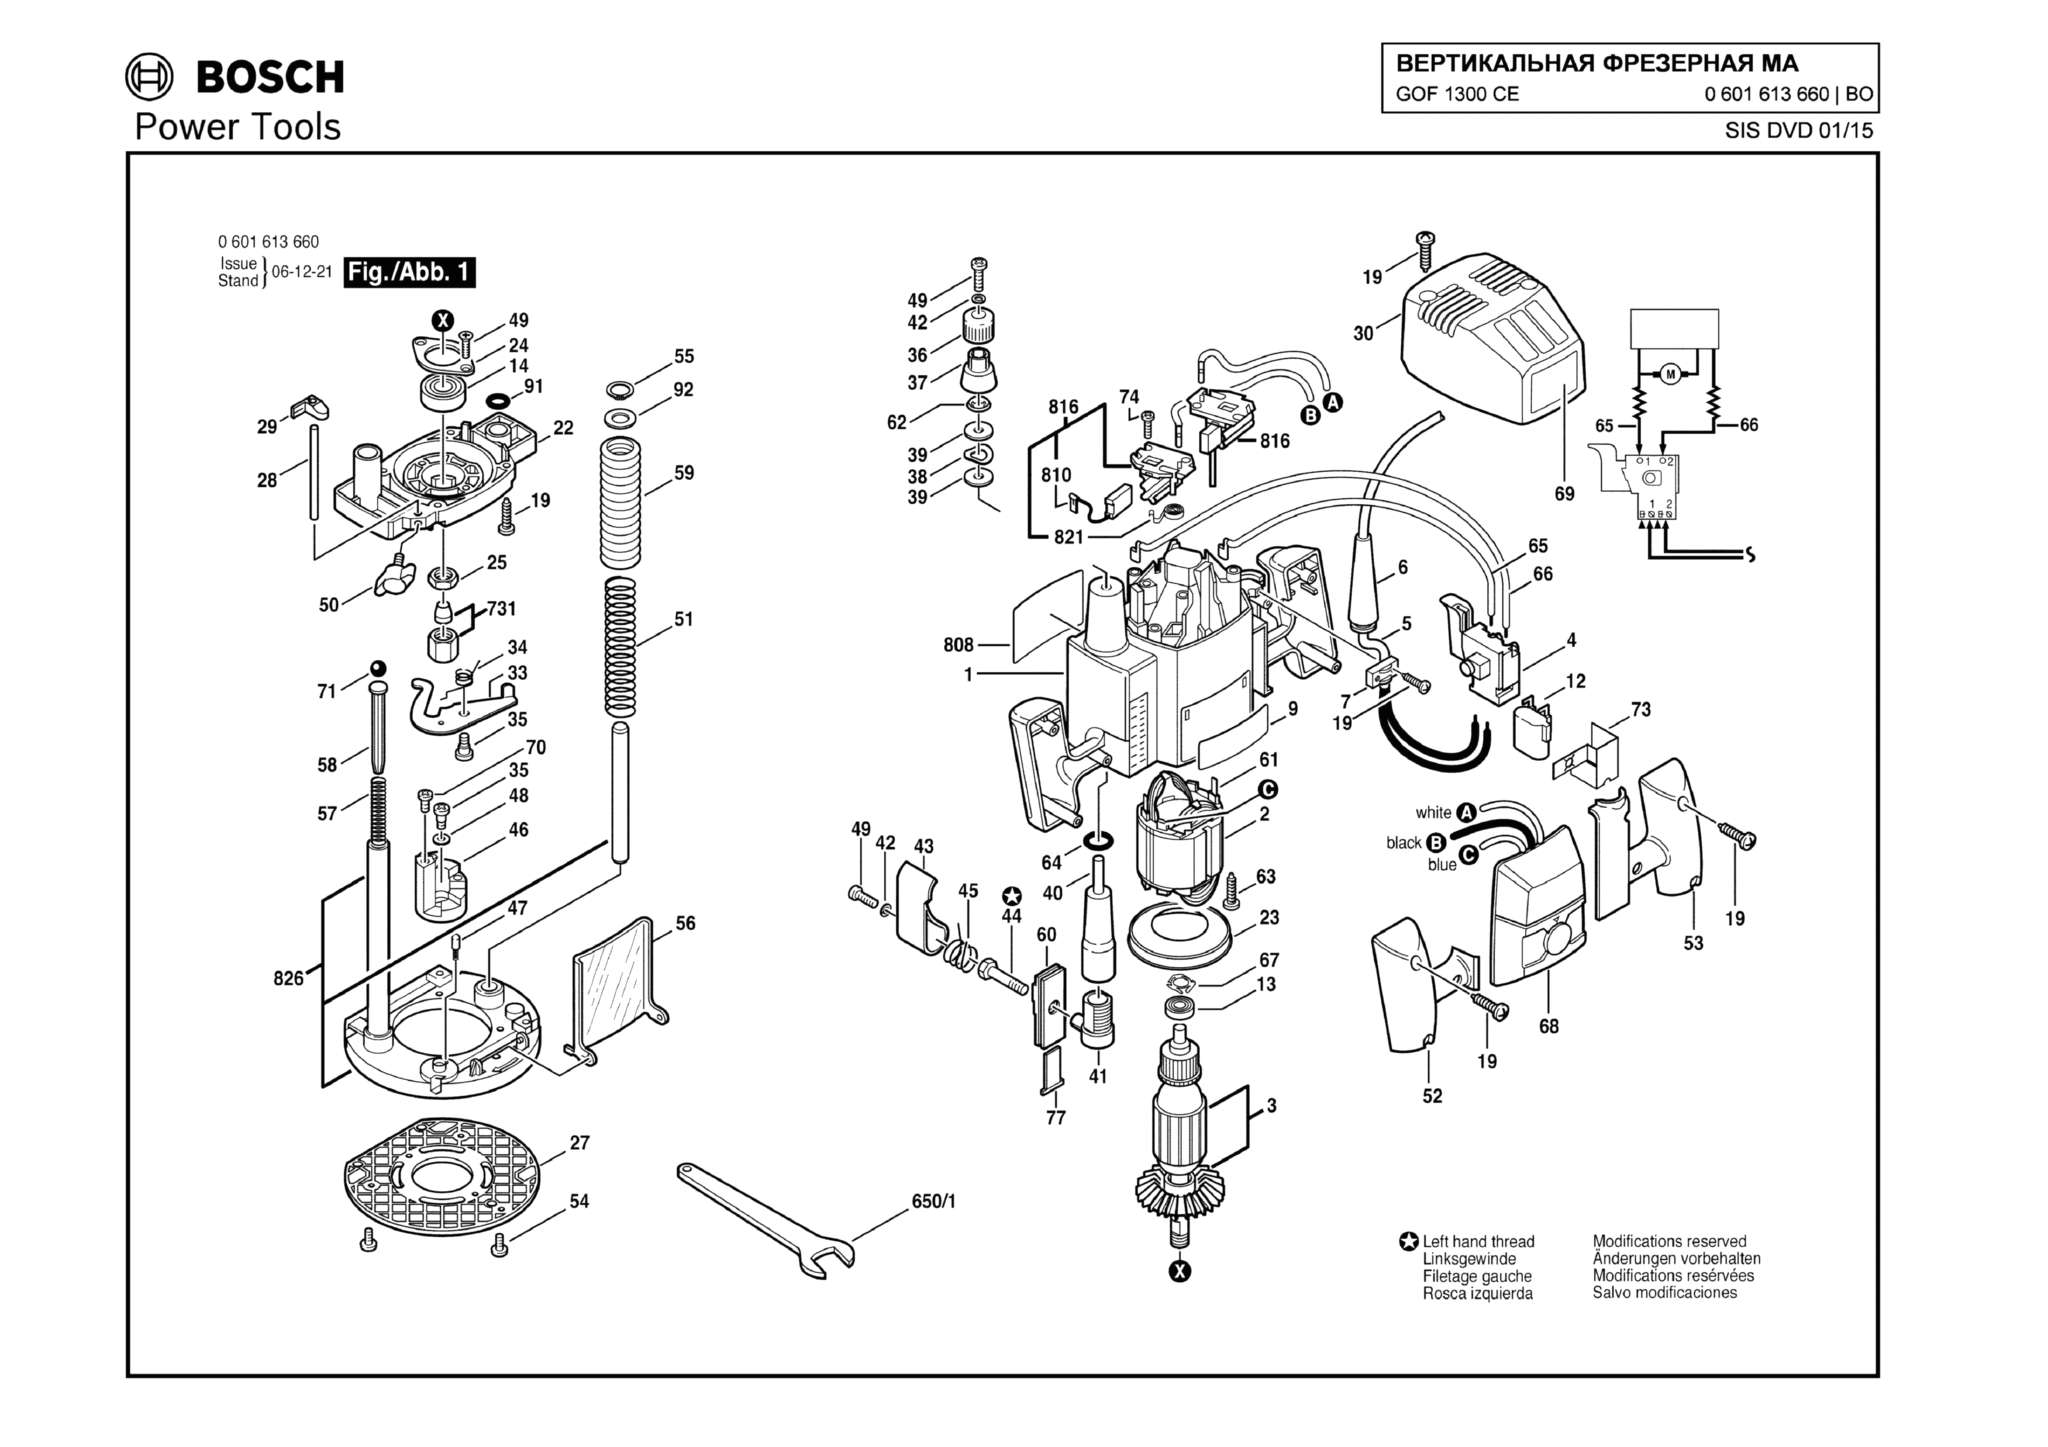 Запчасти, схема и деталировка Bosch GOF 1300 CE (ТИП 0601613660)